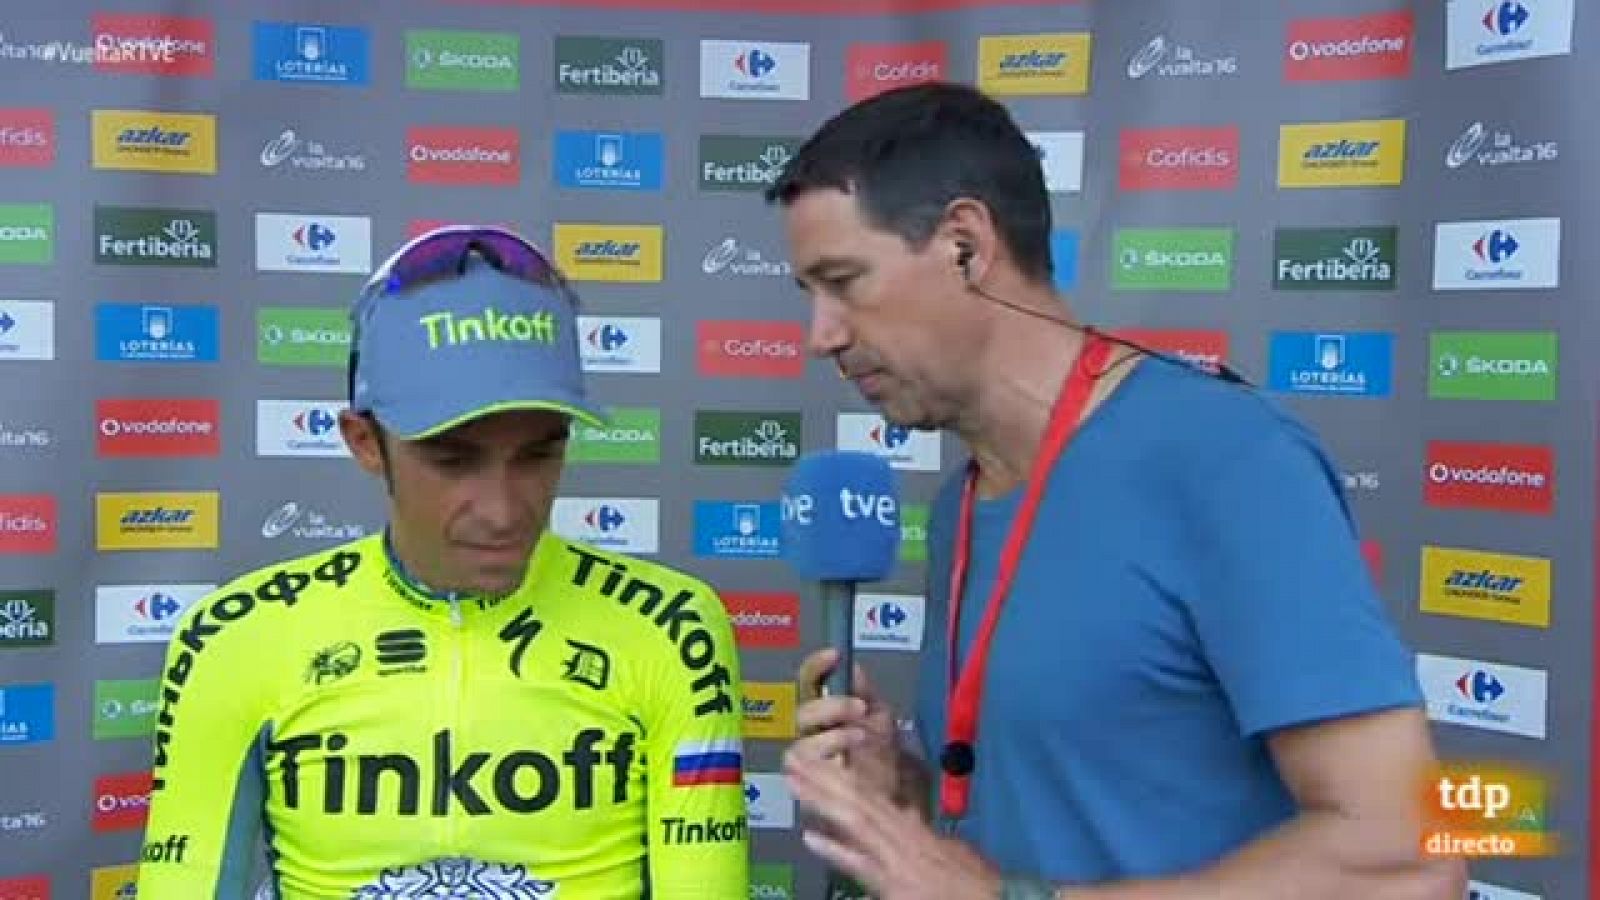 Vuelta 2016 | Contador: "Las piernas han respondido"